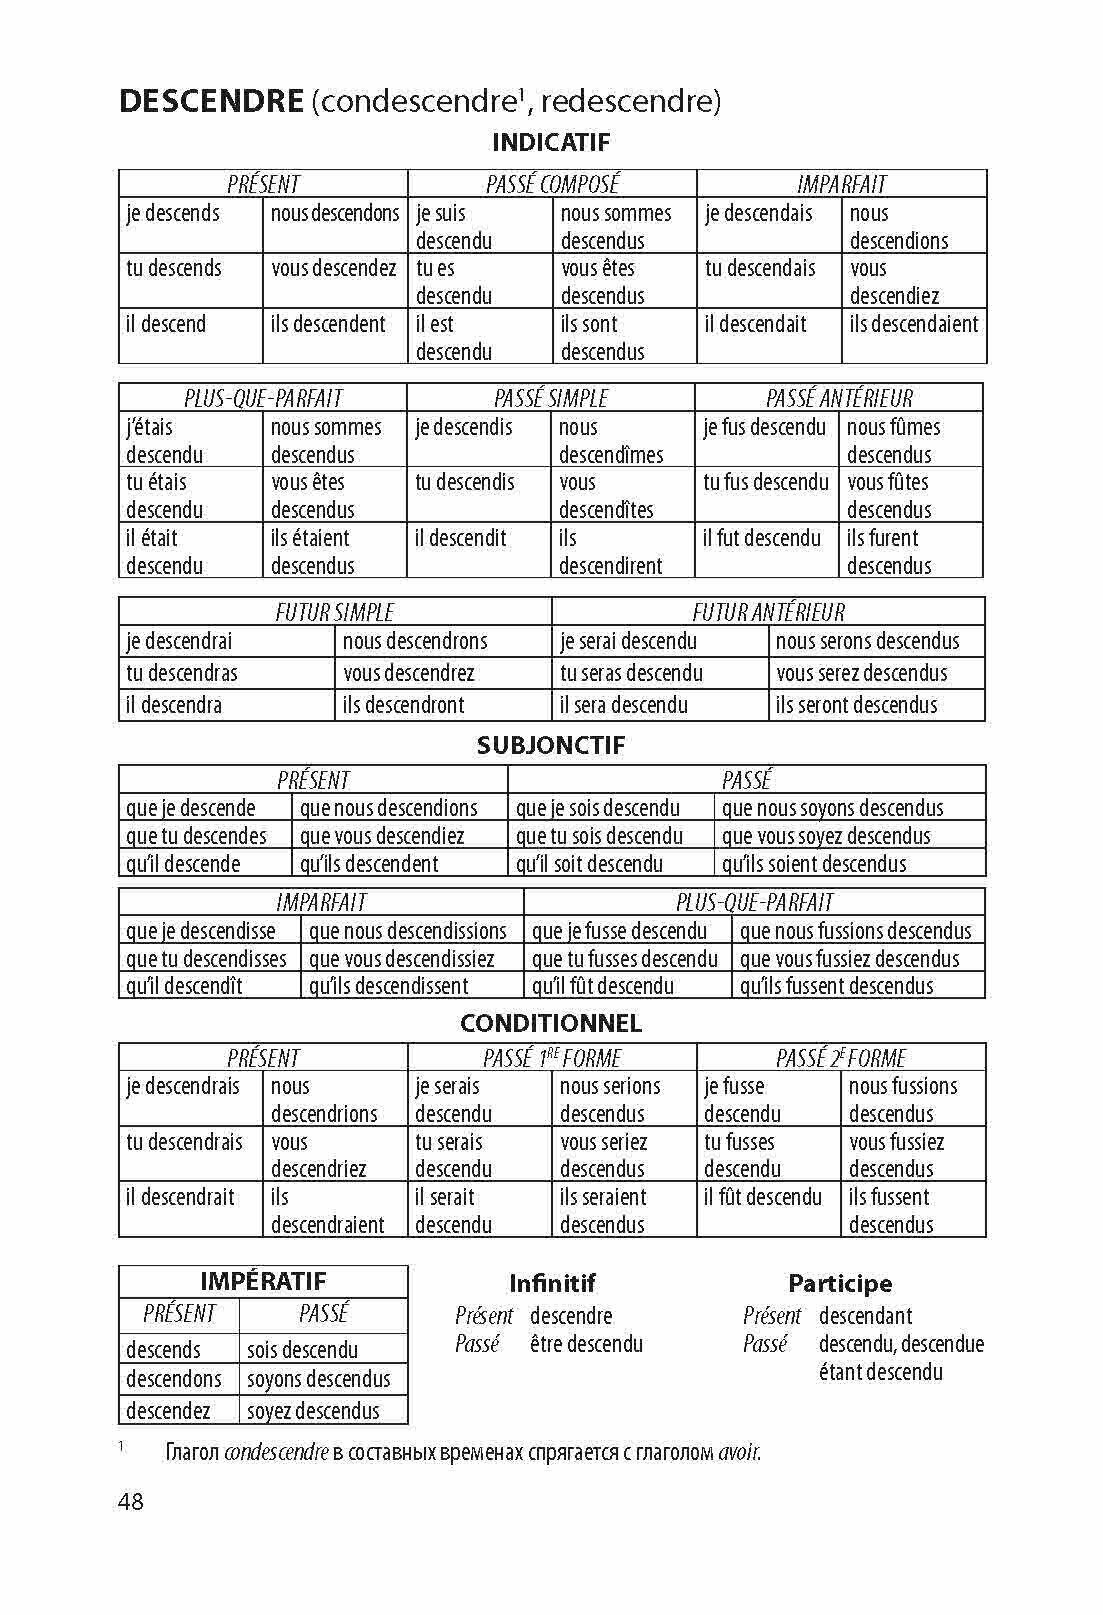 Французские глаголы в таблицах - фото №7